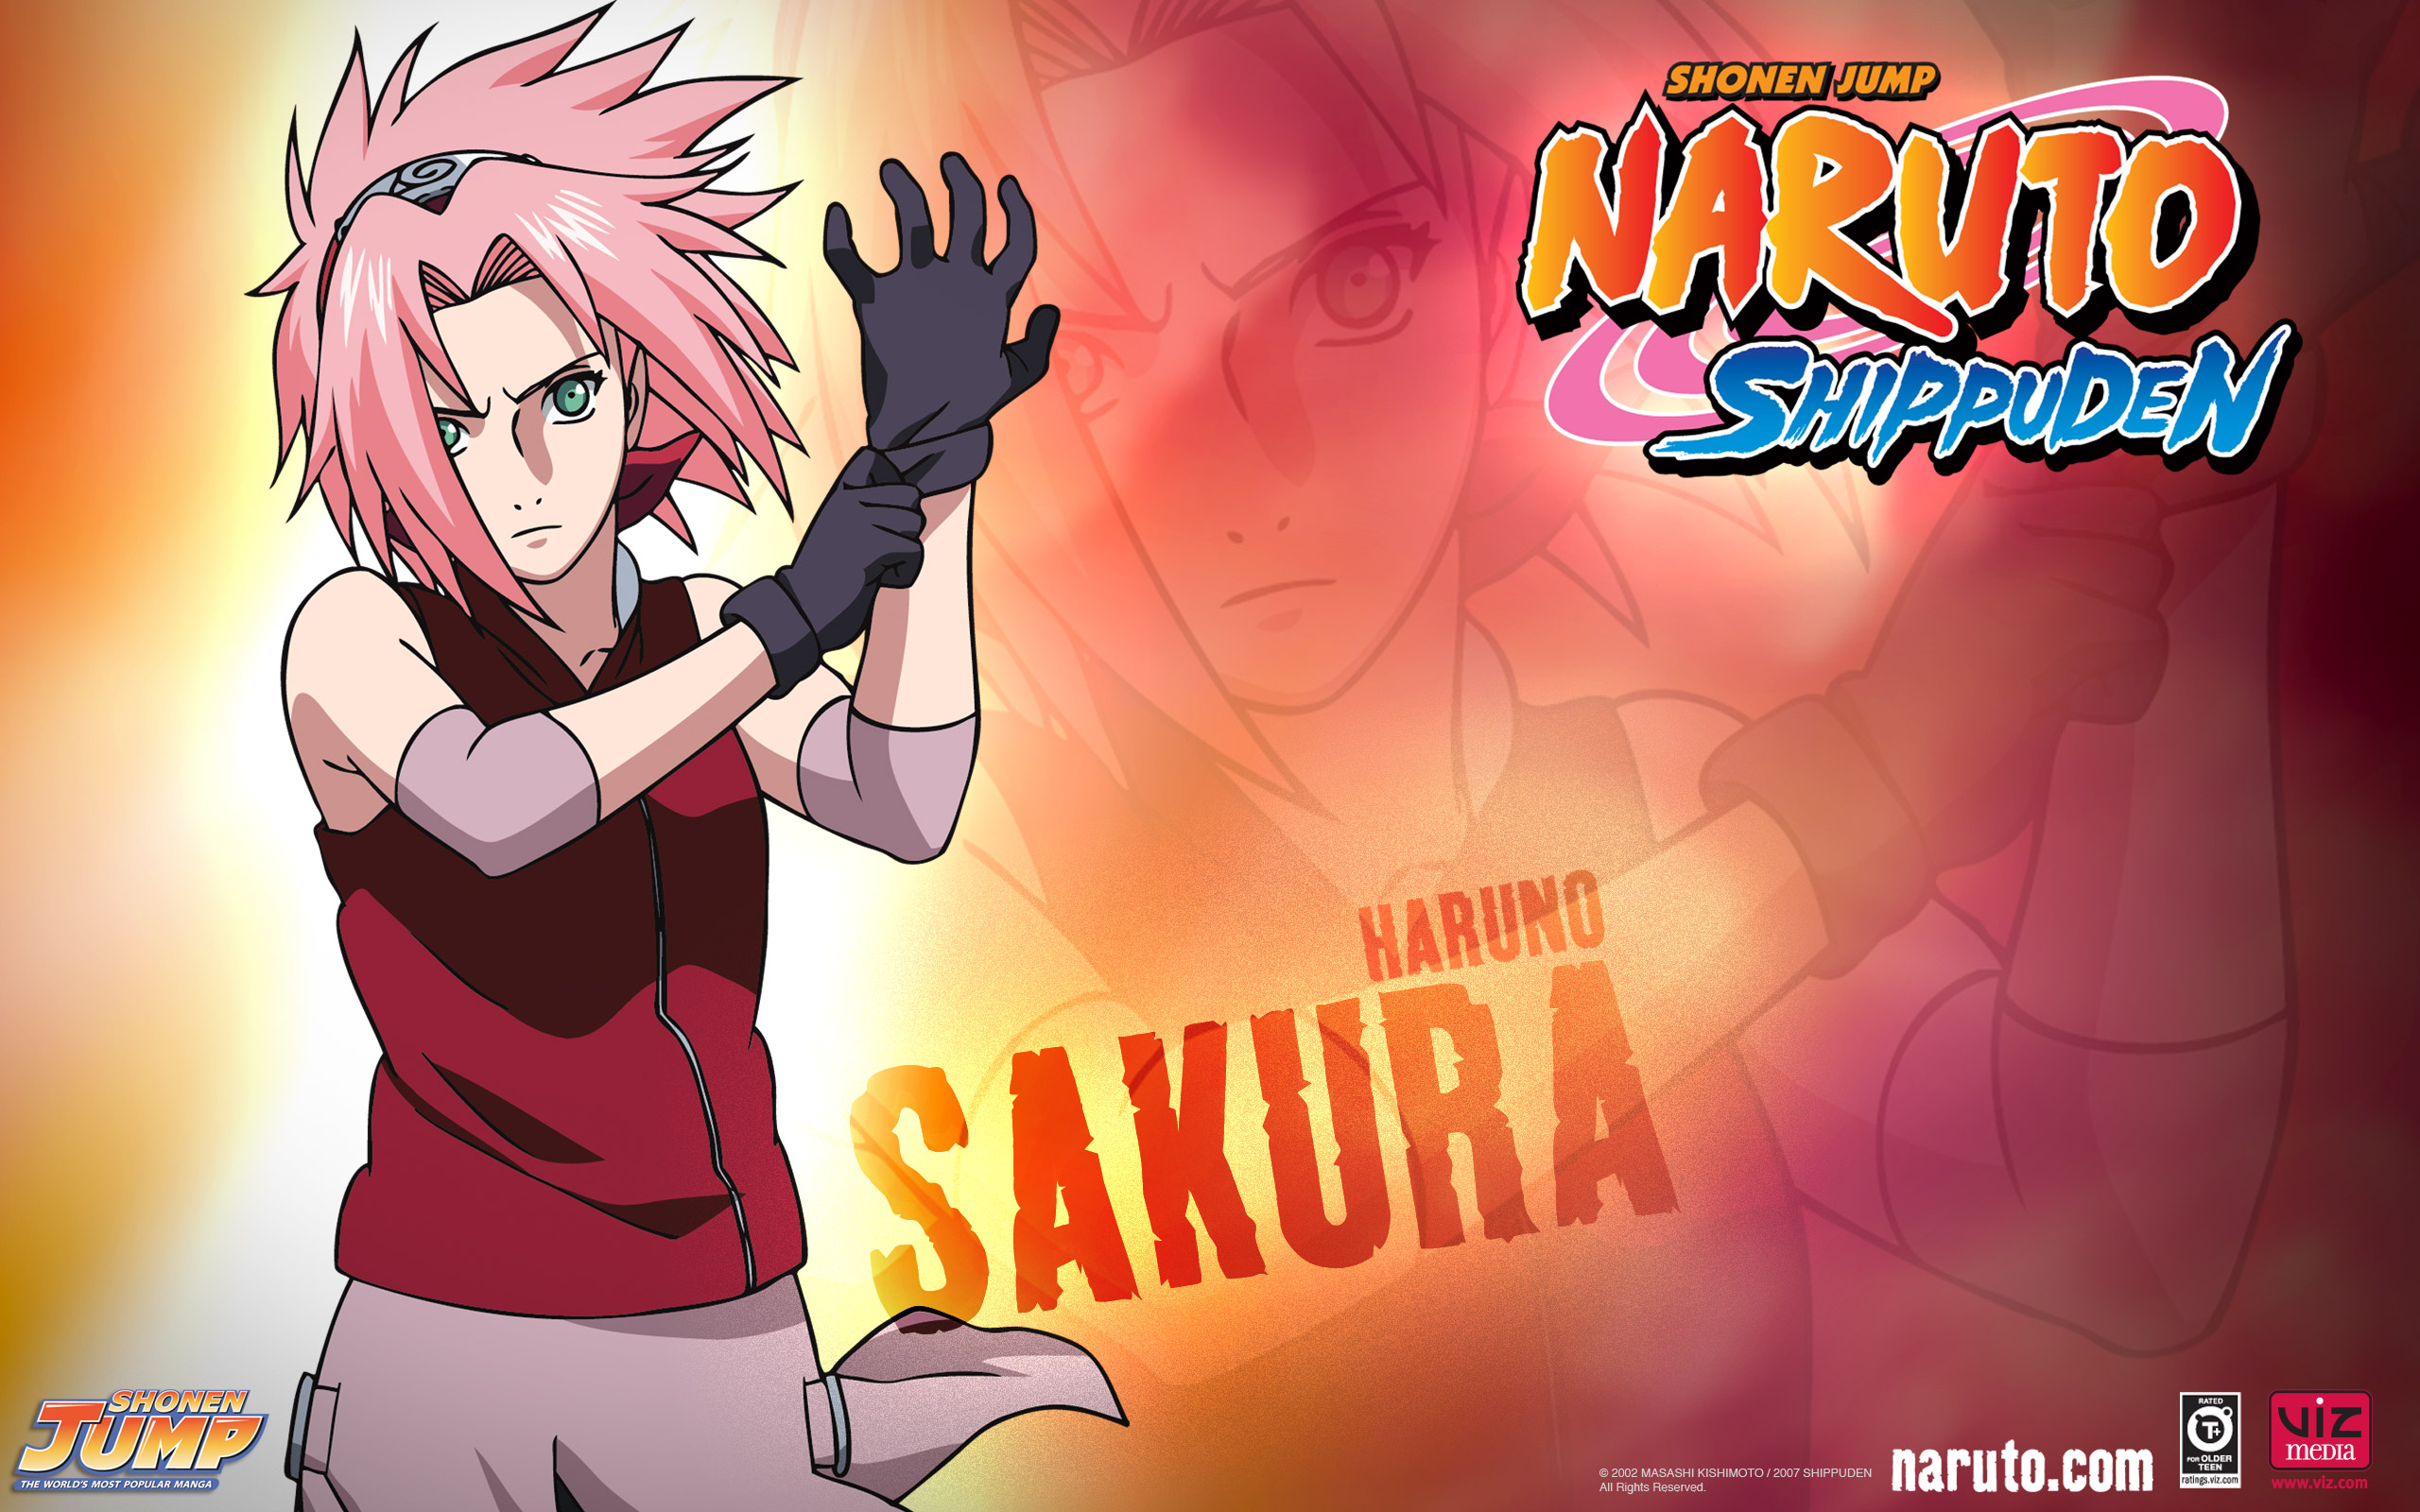 Sakura in Naruto Shippuden desktop wallpaper